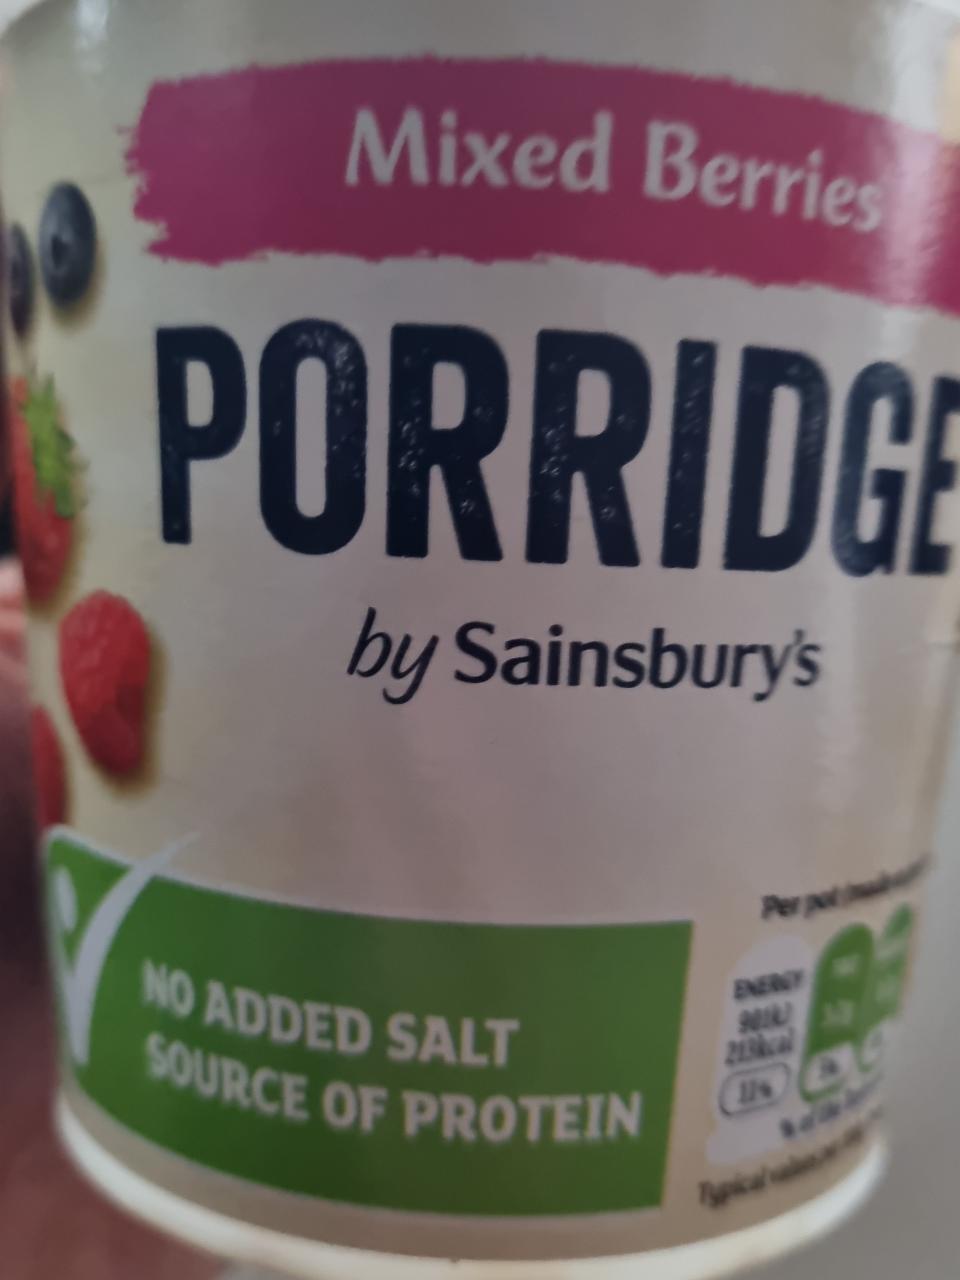 Fotografie - Mixed Berries Porridge by Sainsbury's